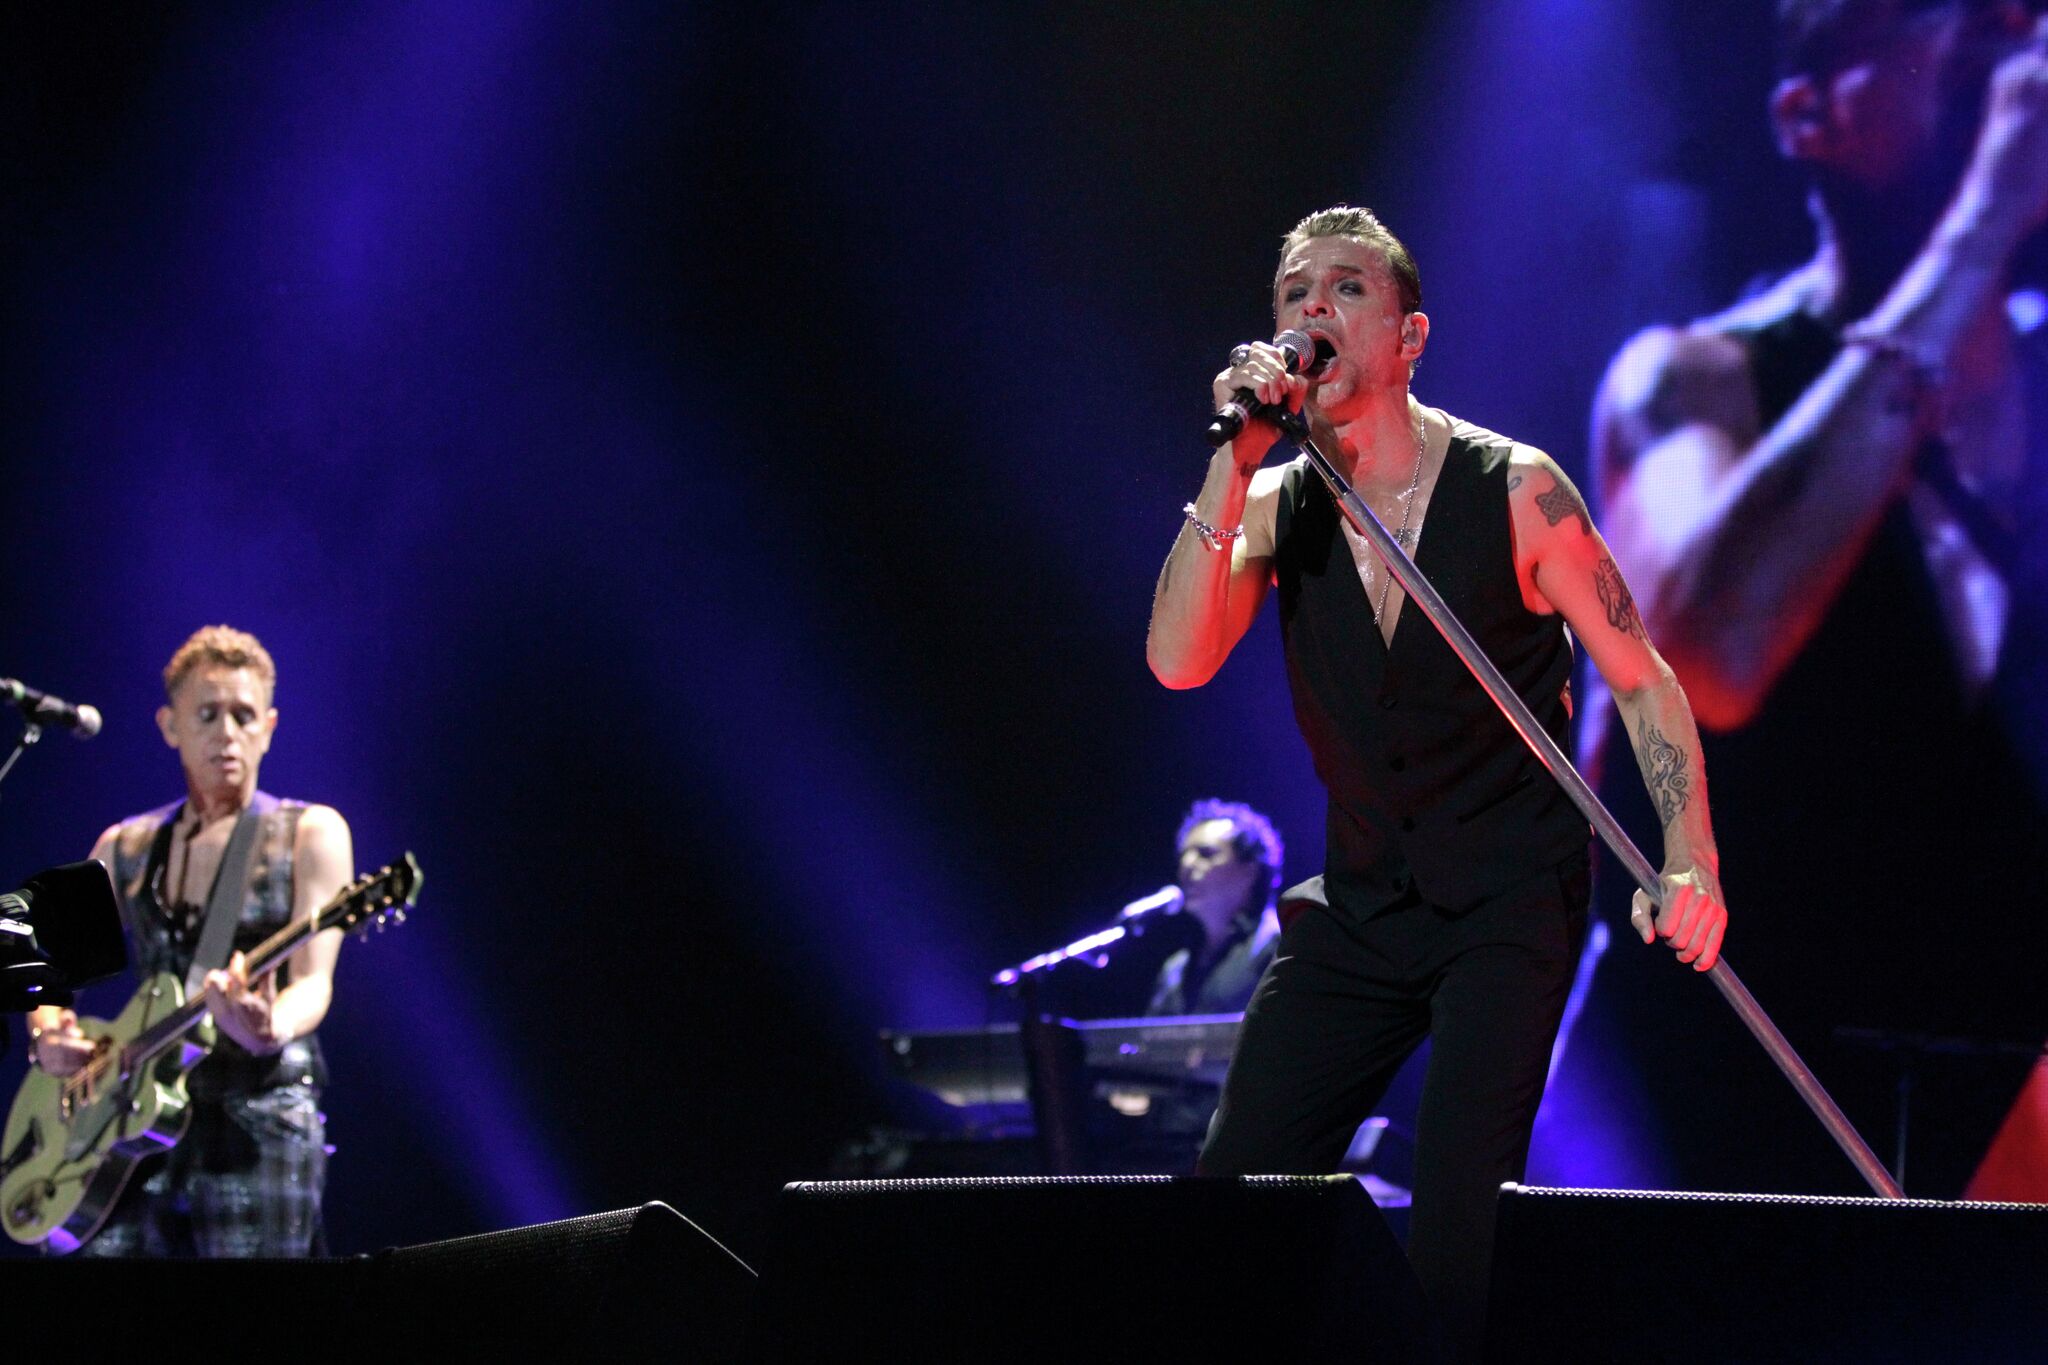 depeche-mode.be on X: Depeche Mode World Tour 2023 #DepecheMode